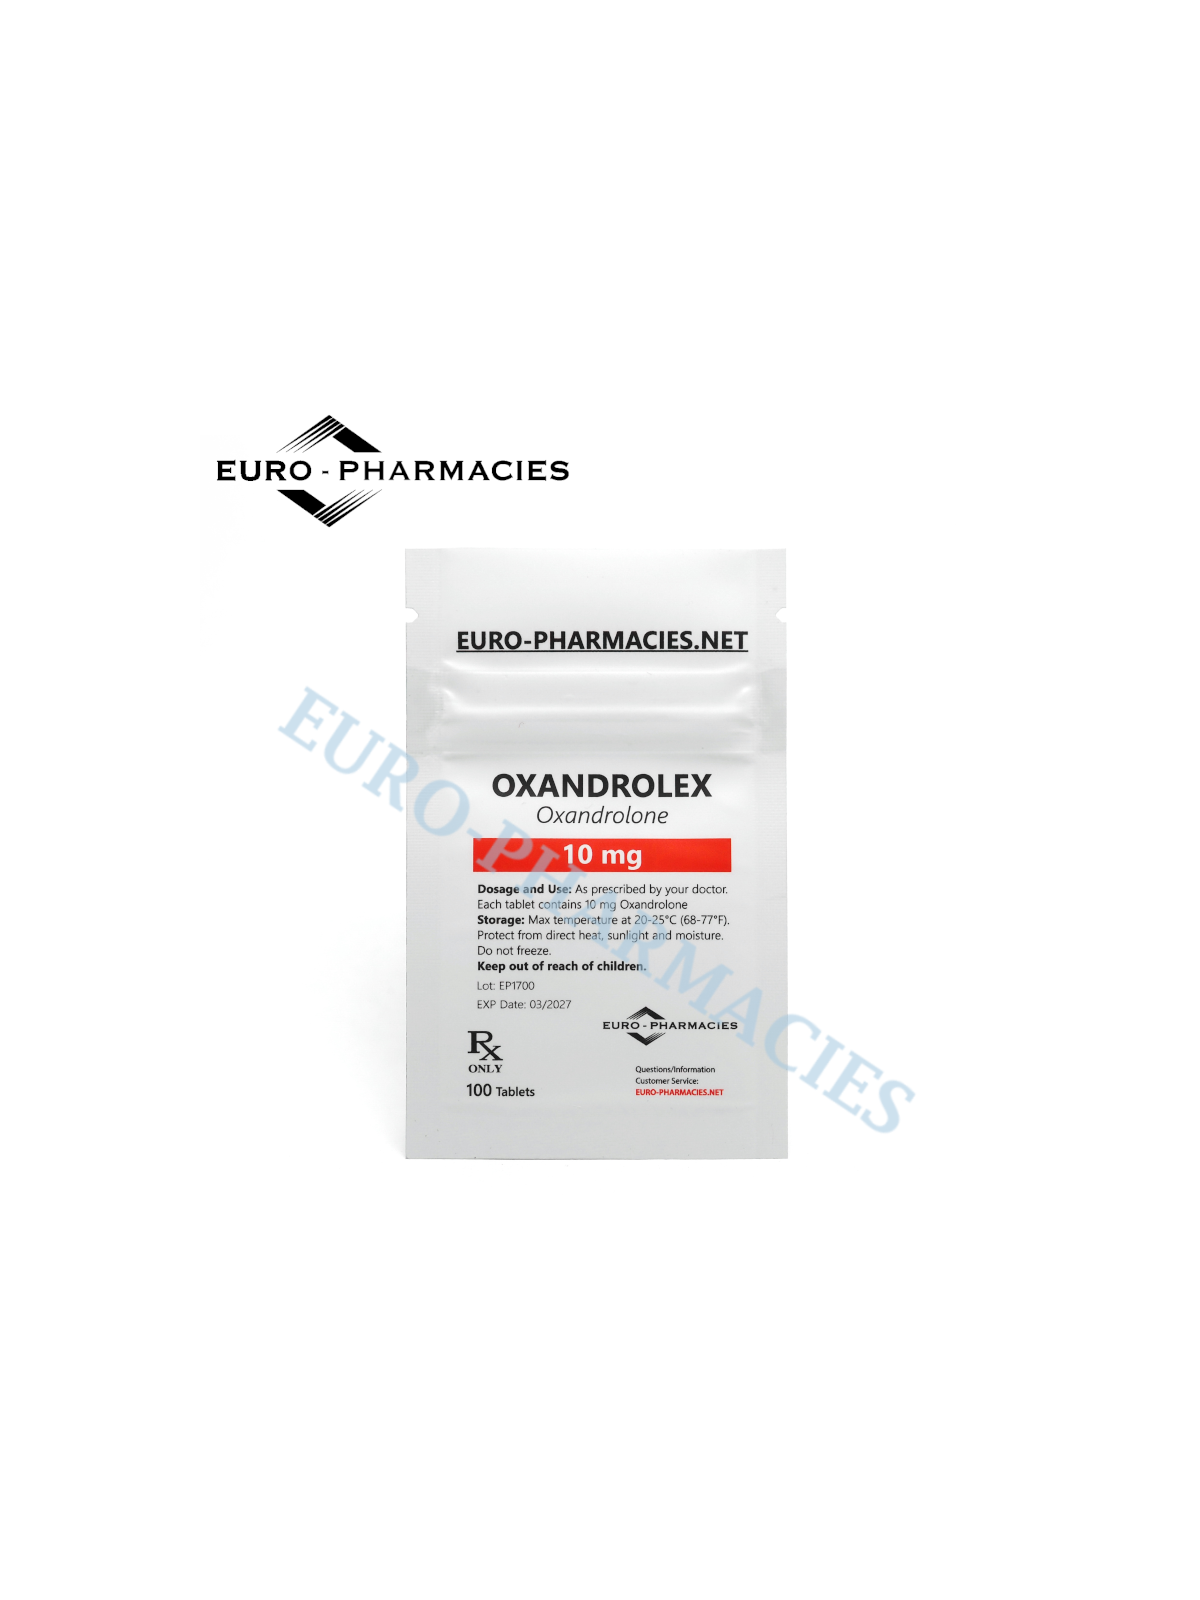 Oxandrolex (Anavar) - 10mg/tab, 100 pills/bag - Euro-Pharmacies - USA